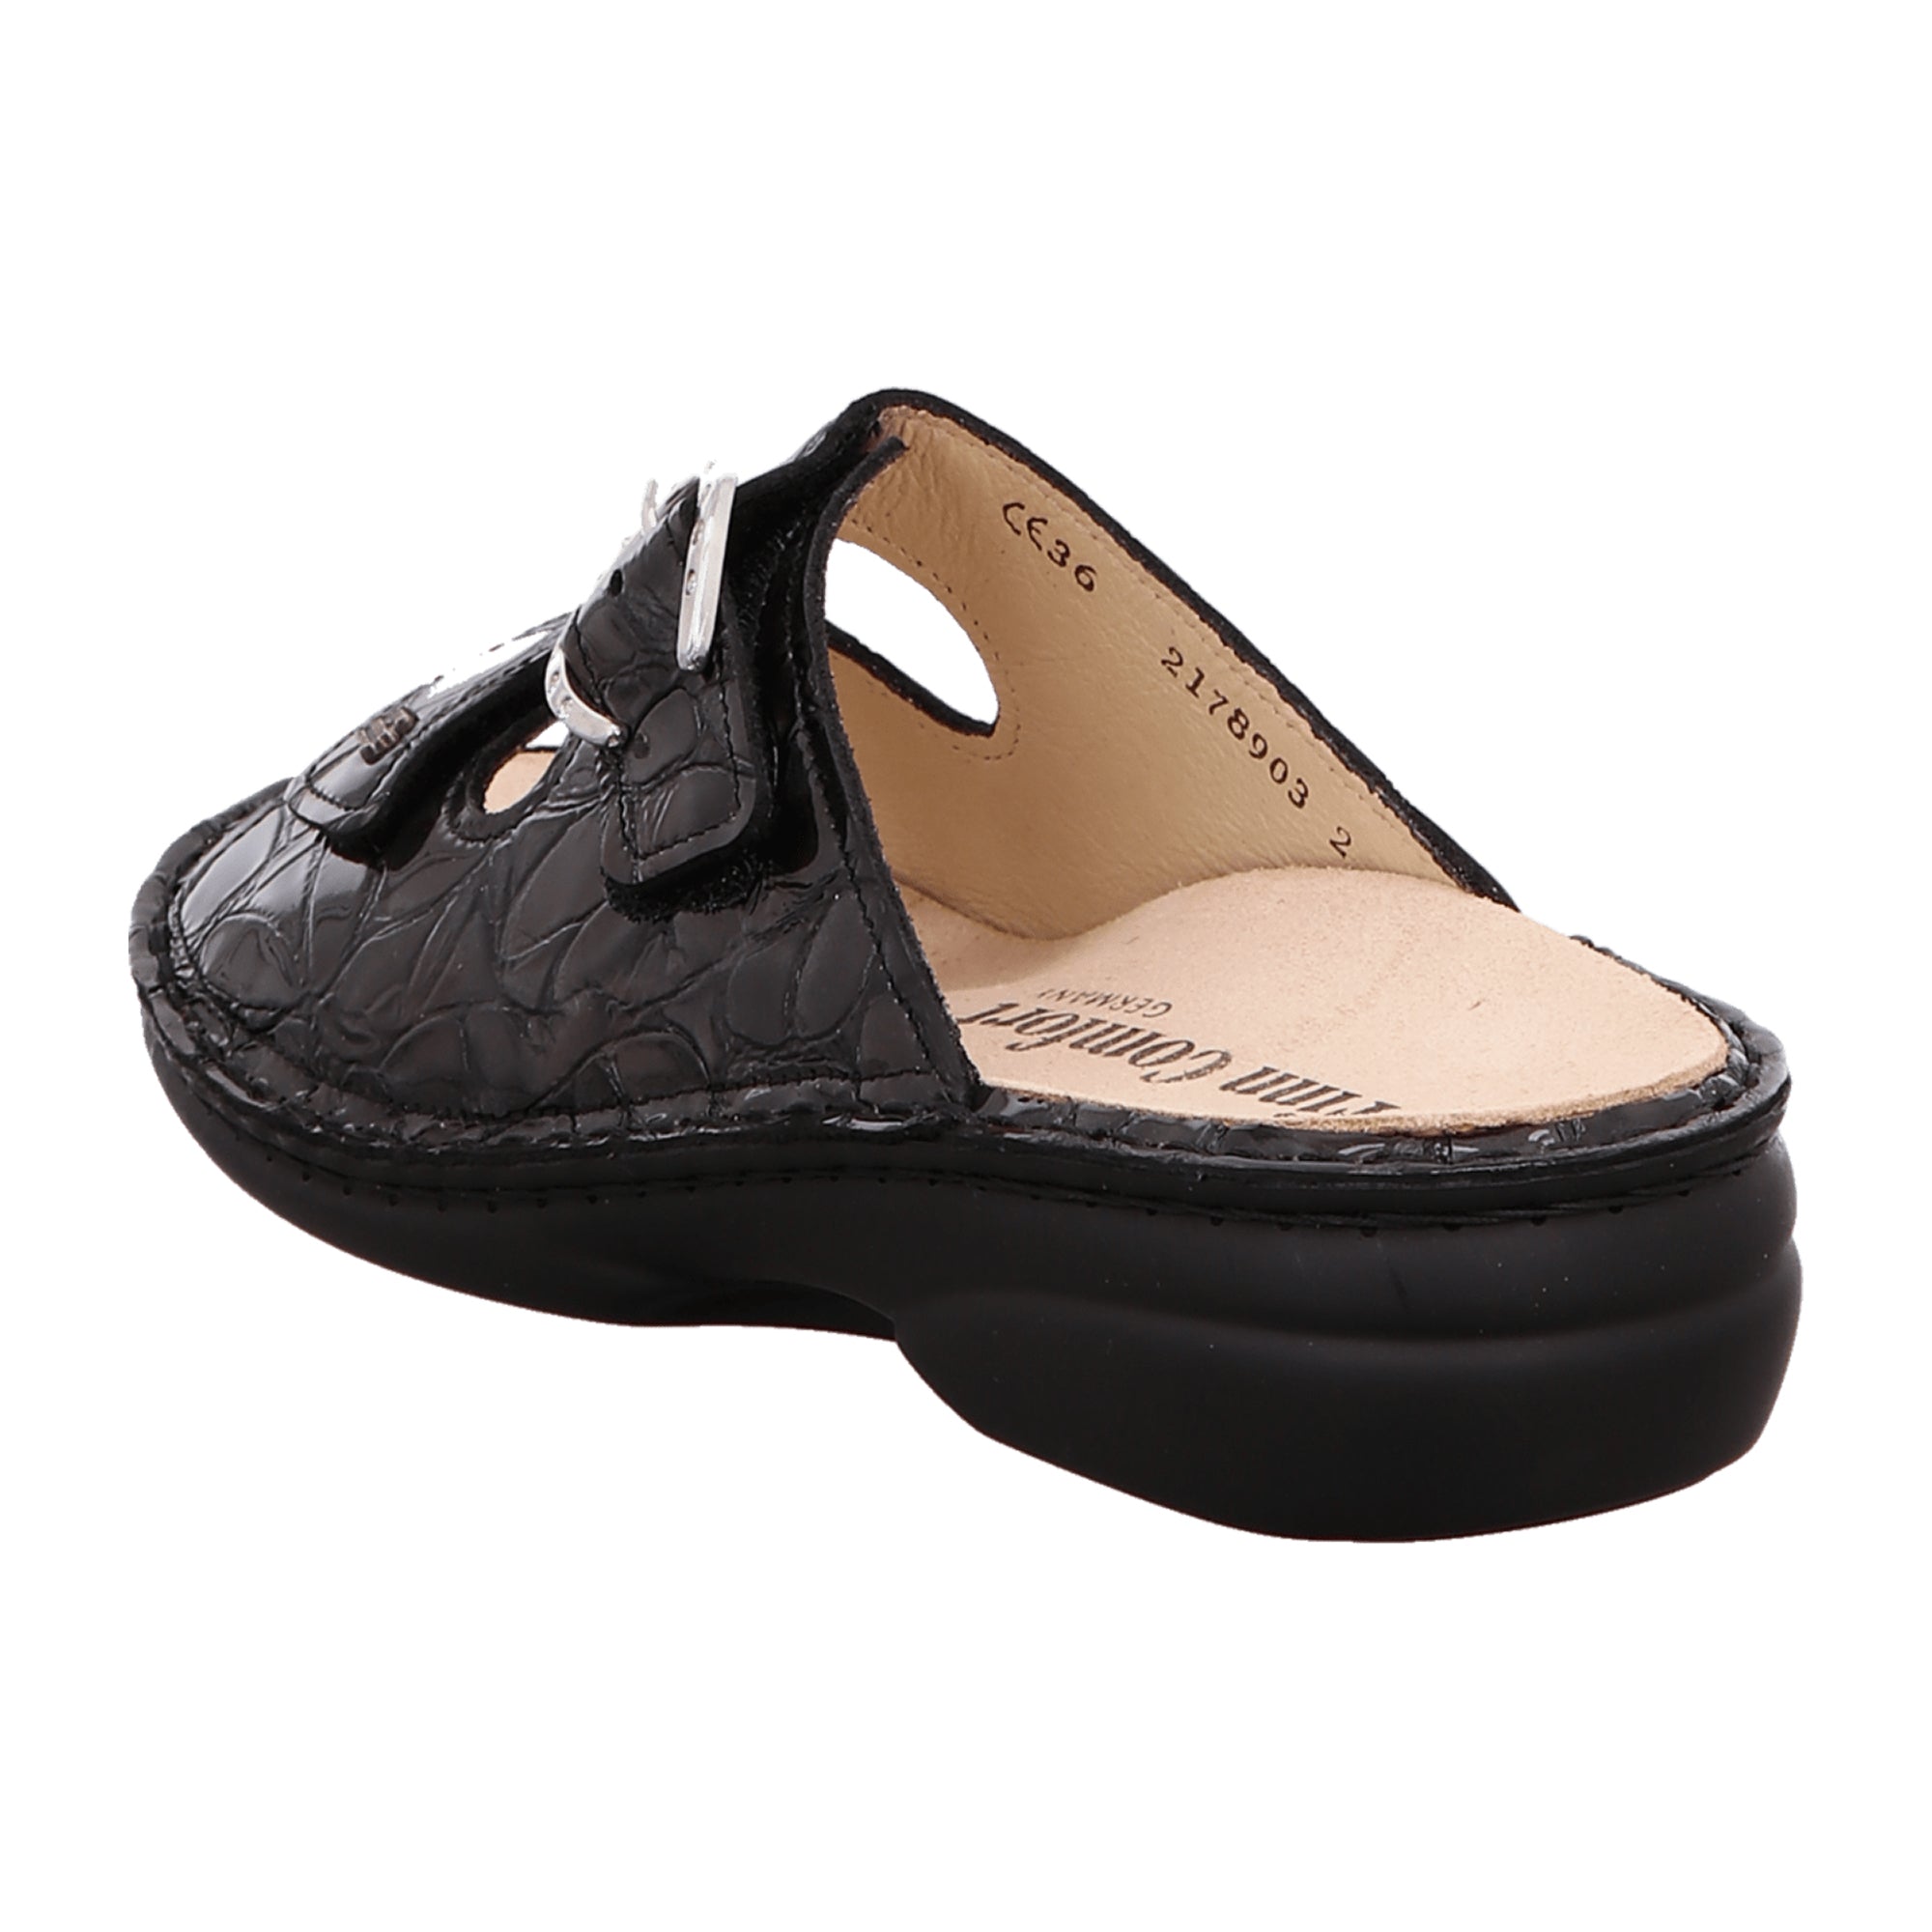 Finn Comfort Mumbai Women's Comfort Sandals - Durable and Stylish Black